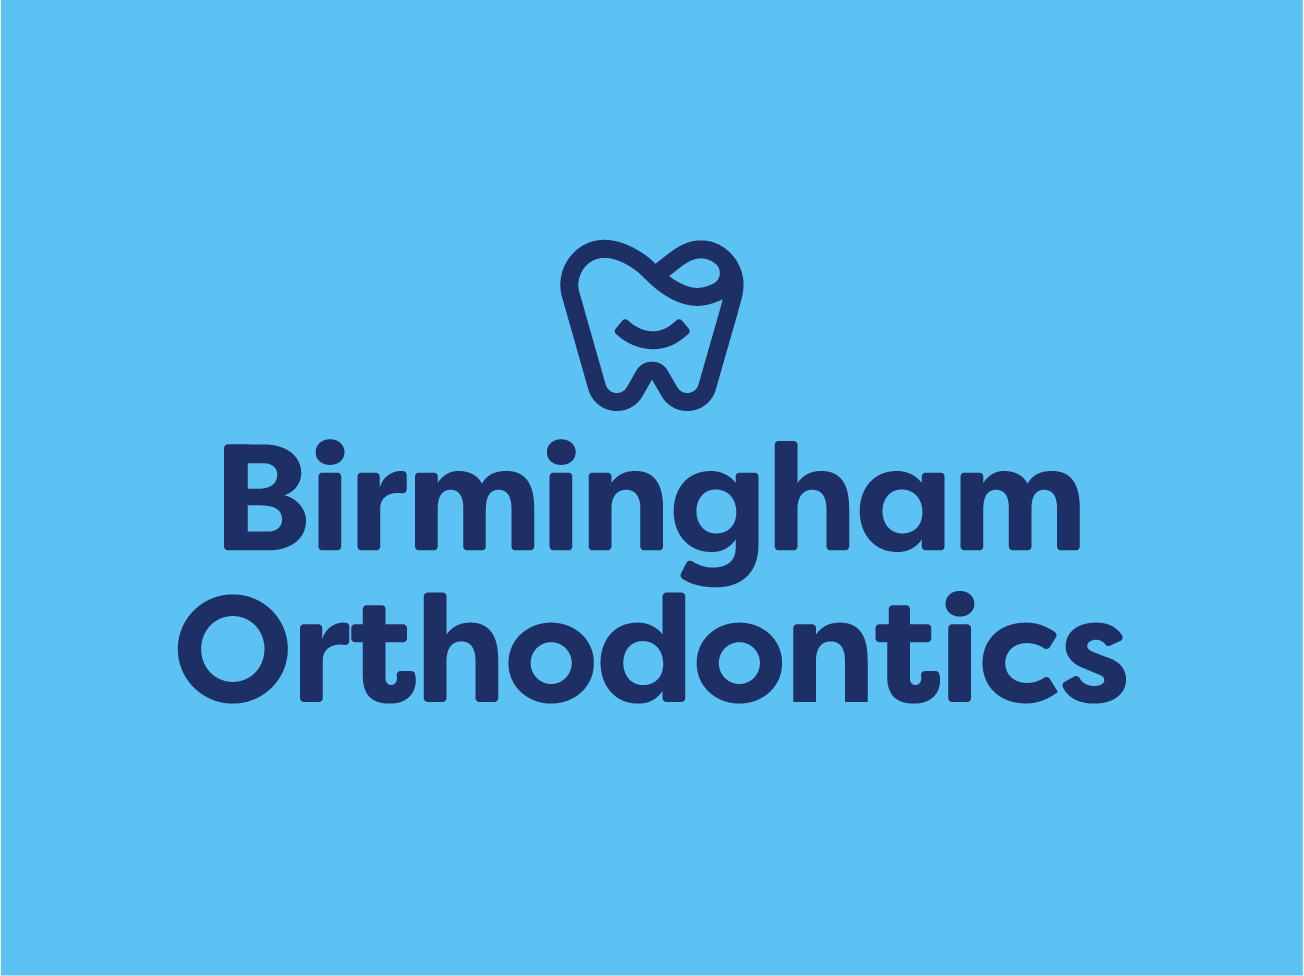 Birmingham Orthodontics Logos-02.png